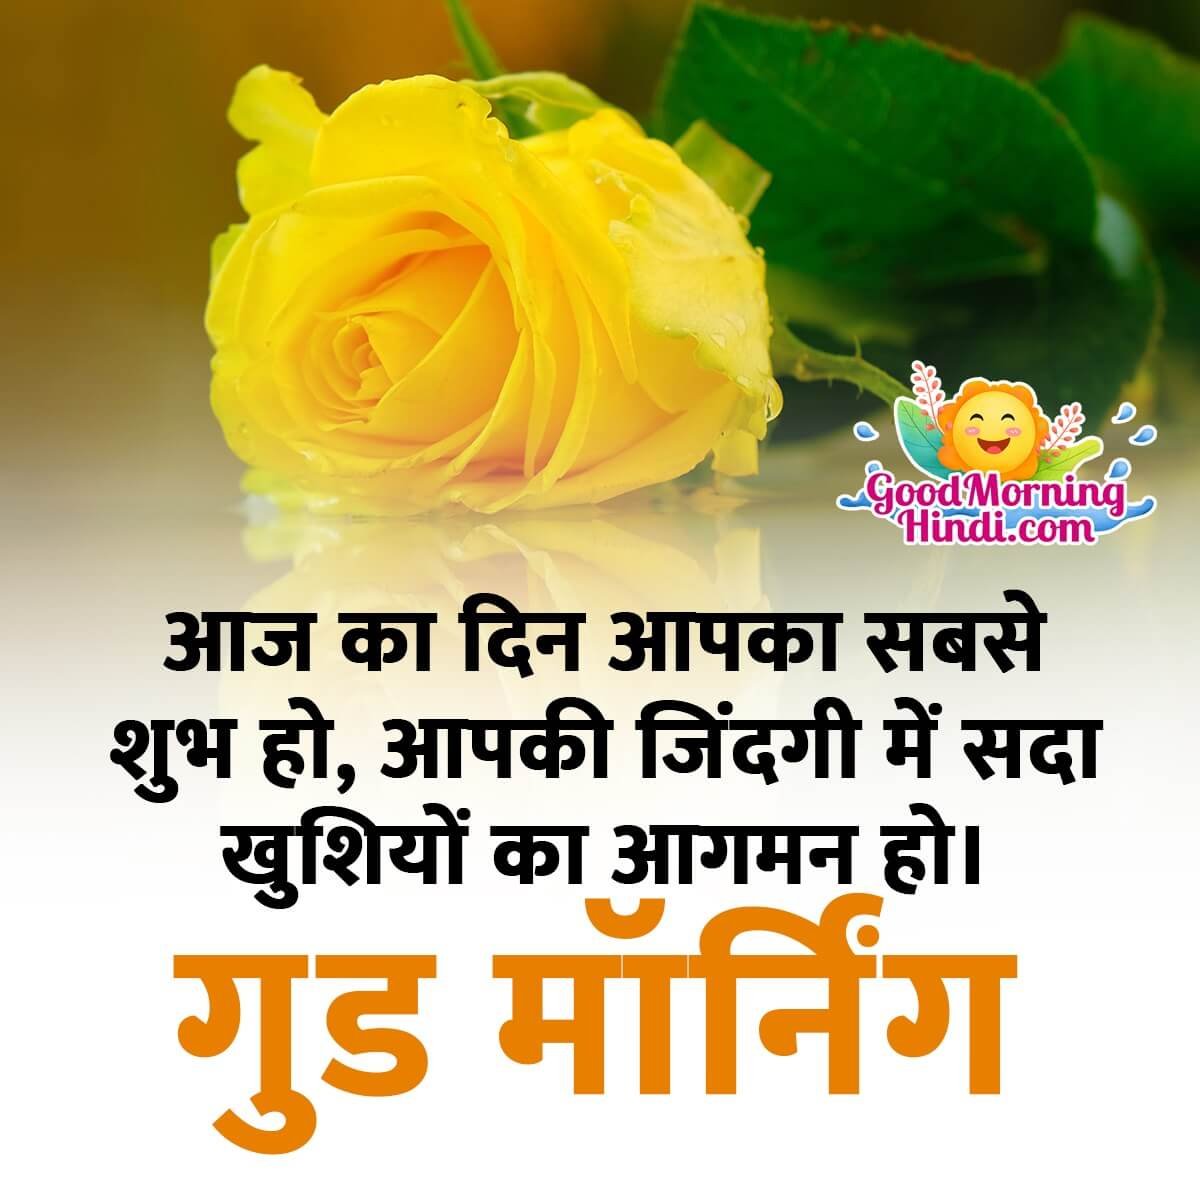 Good Morning Hindi Wishes